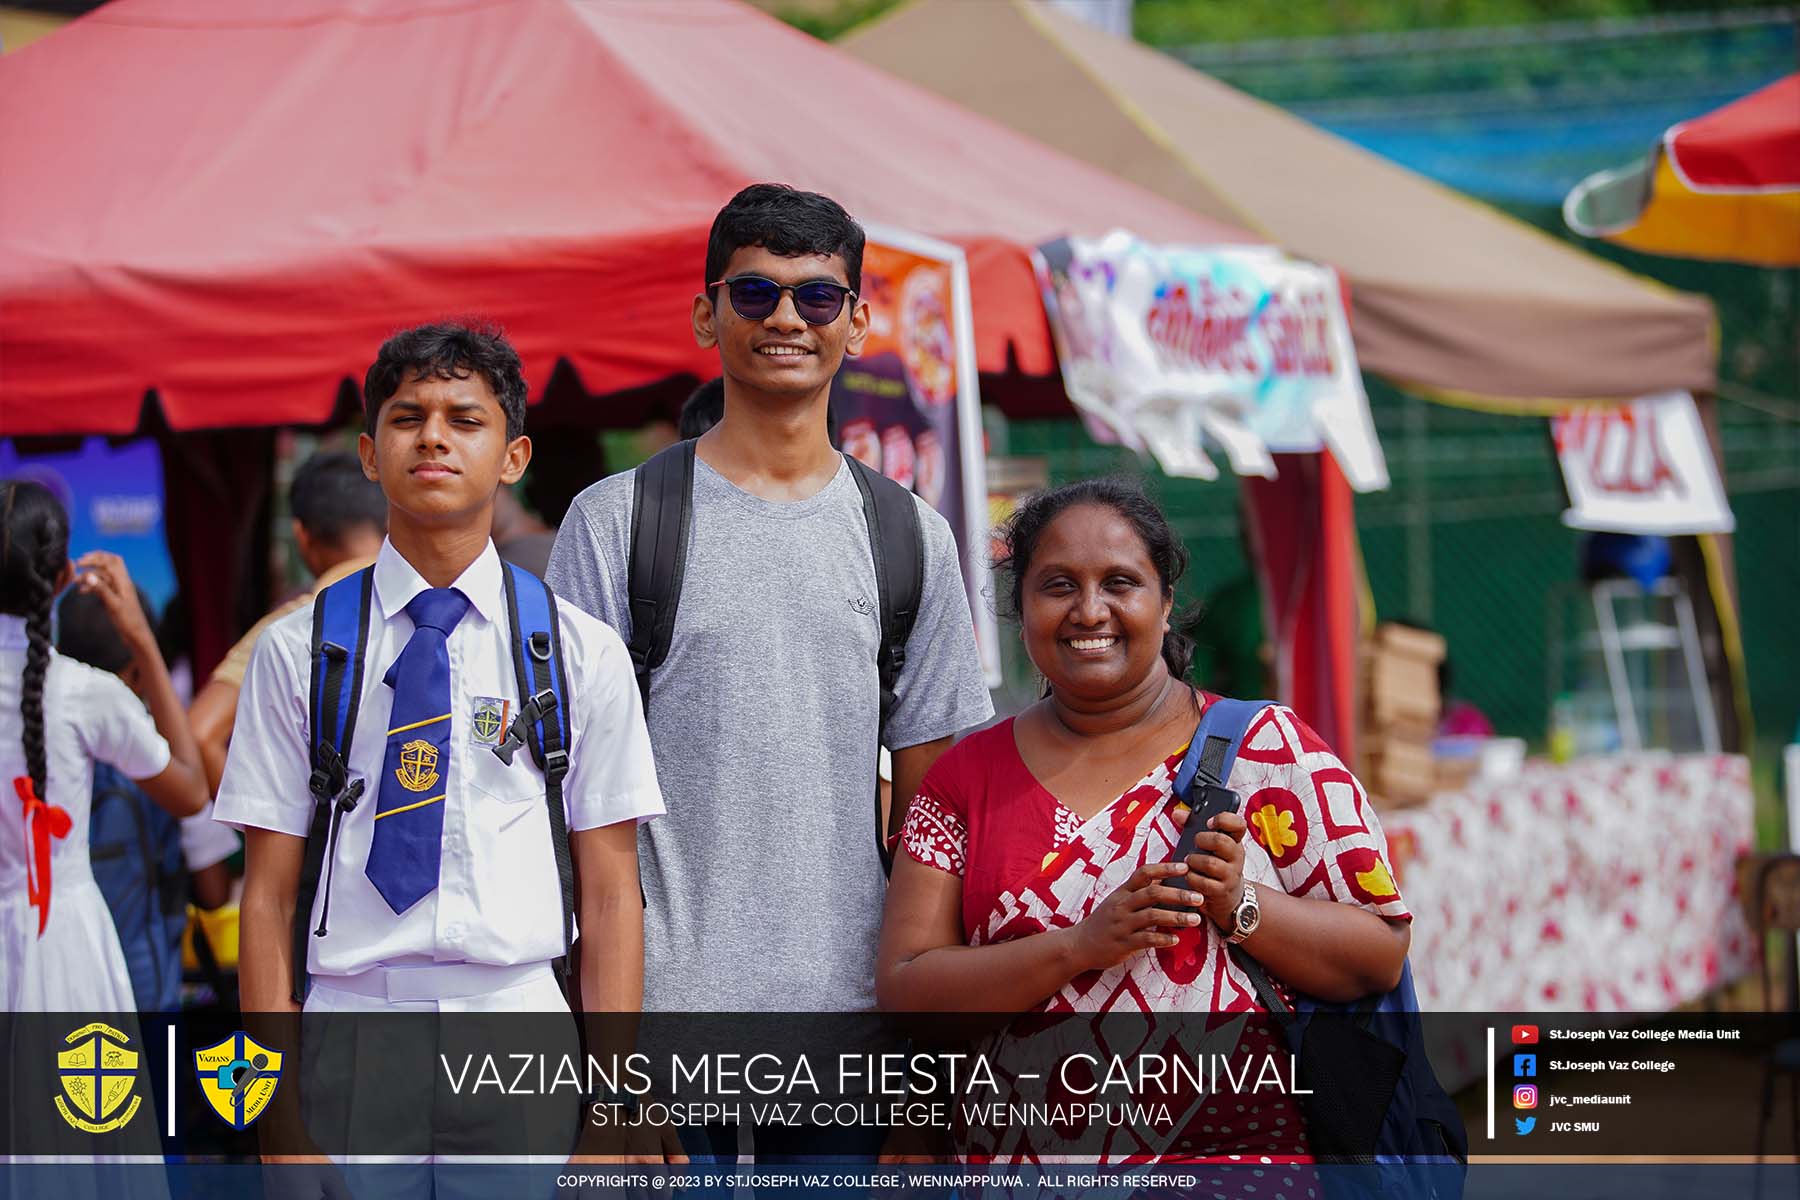 Vazians Mega Fiesta - Carnival - St. Joseph Vaz College - Wennappuwa - Sri Lanka